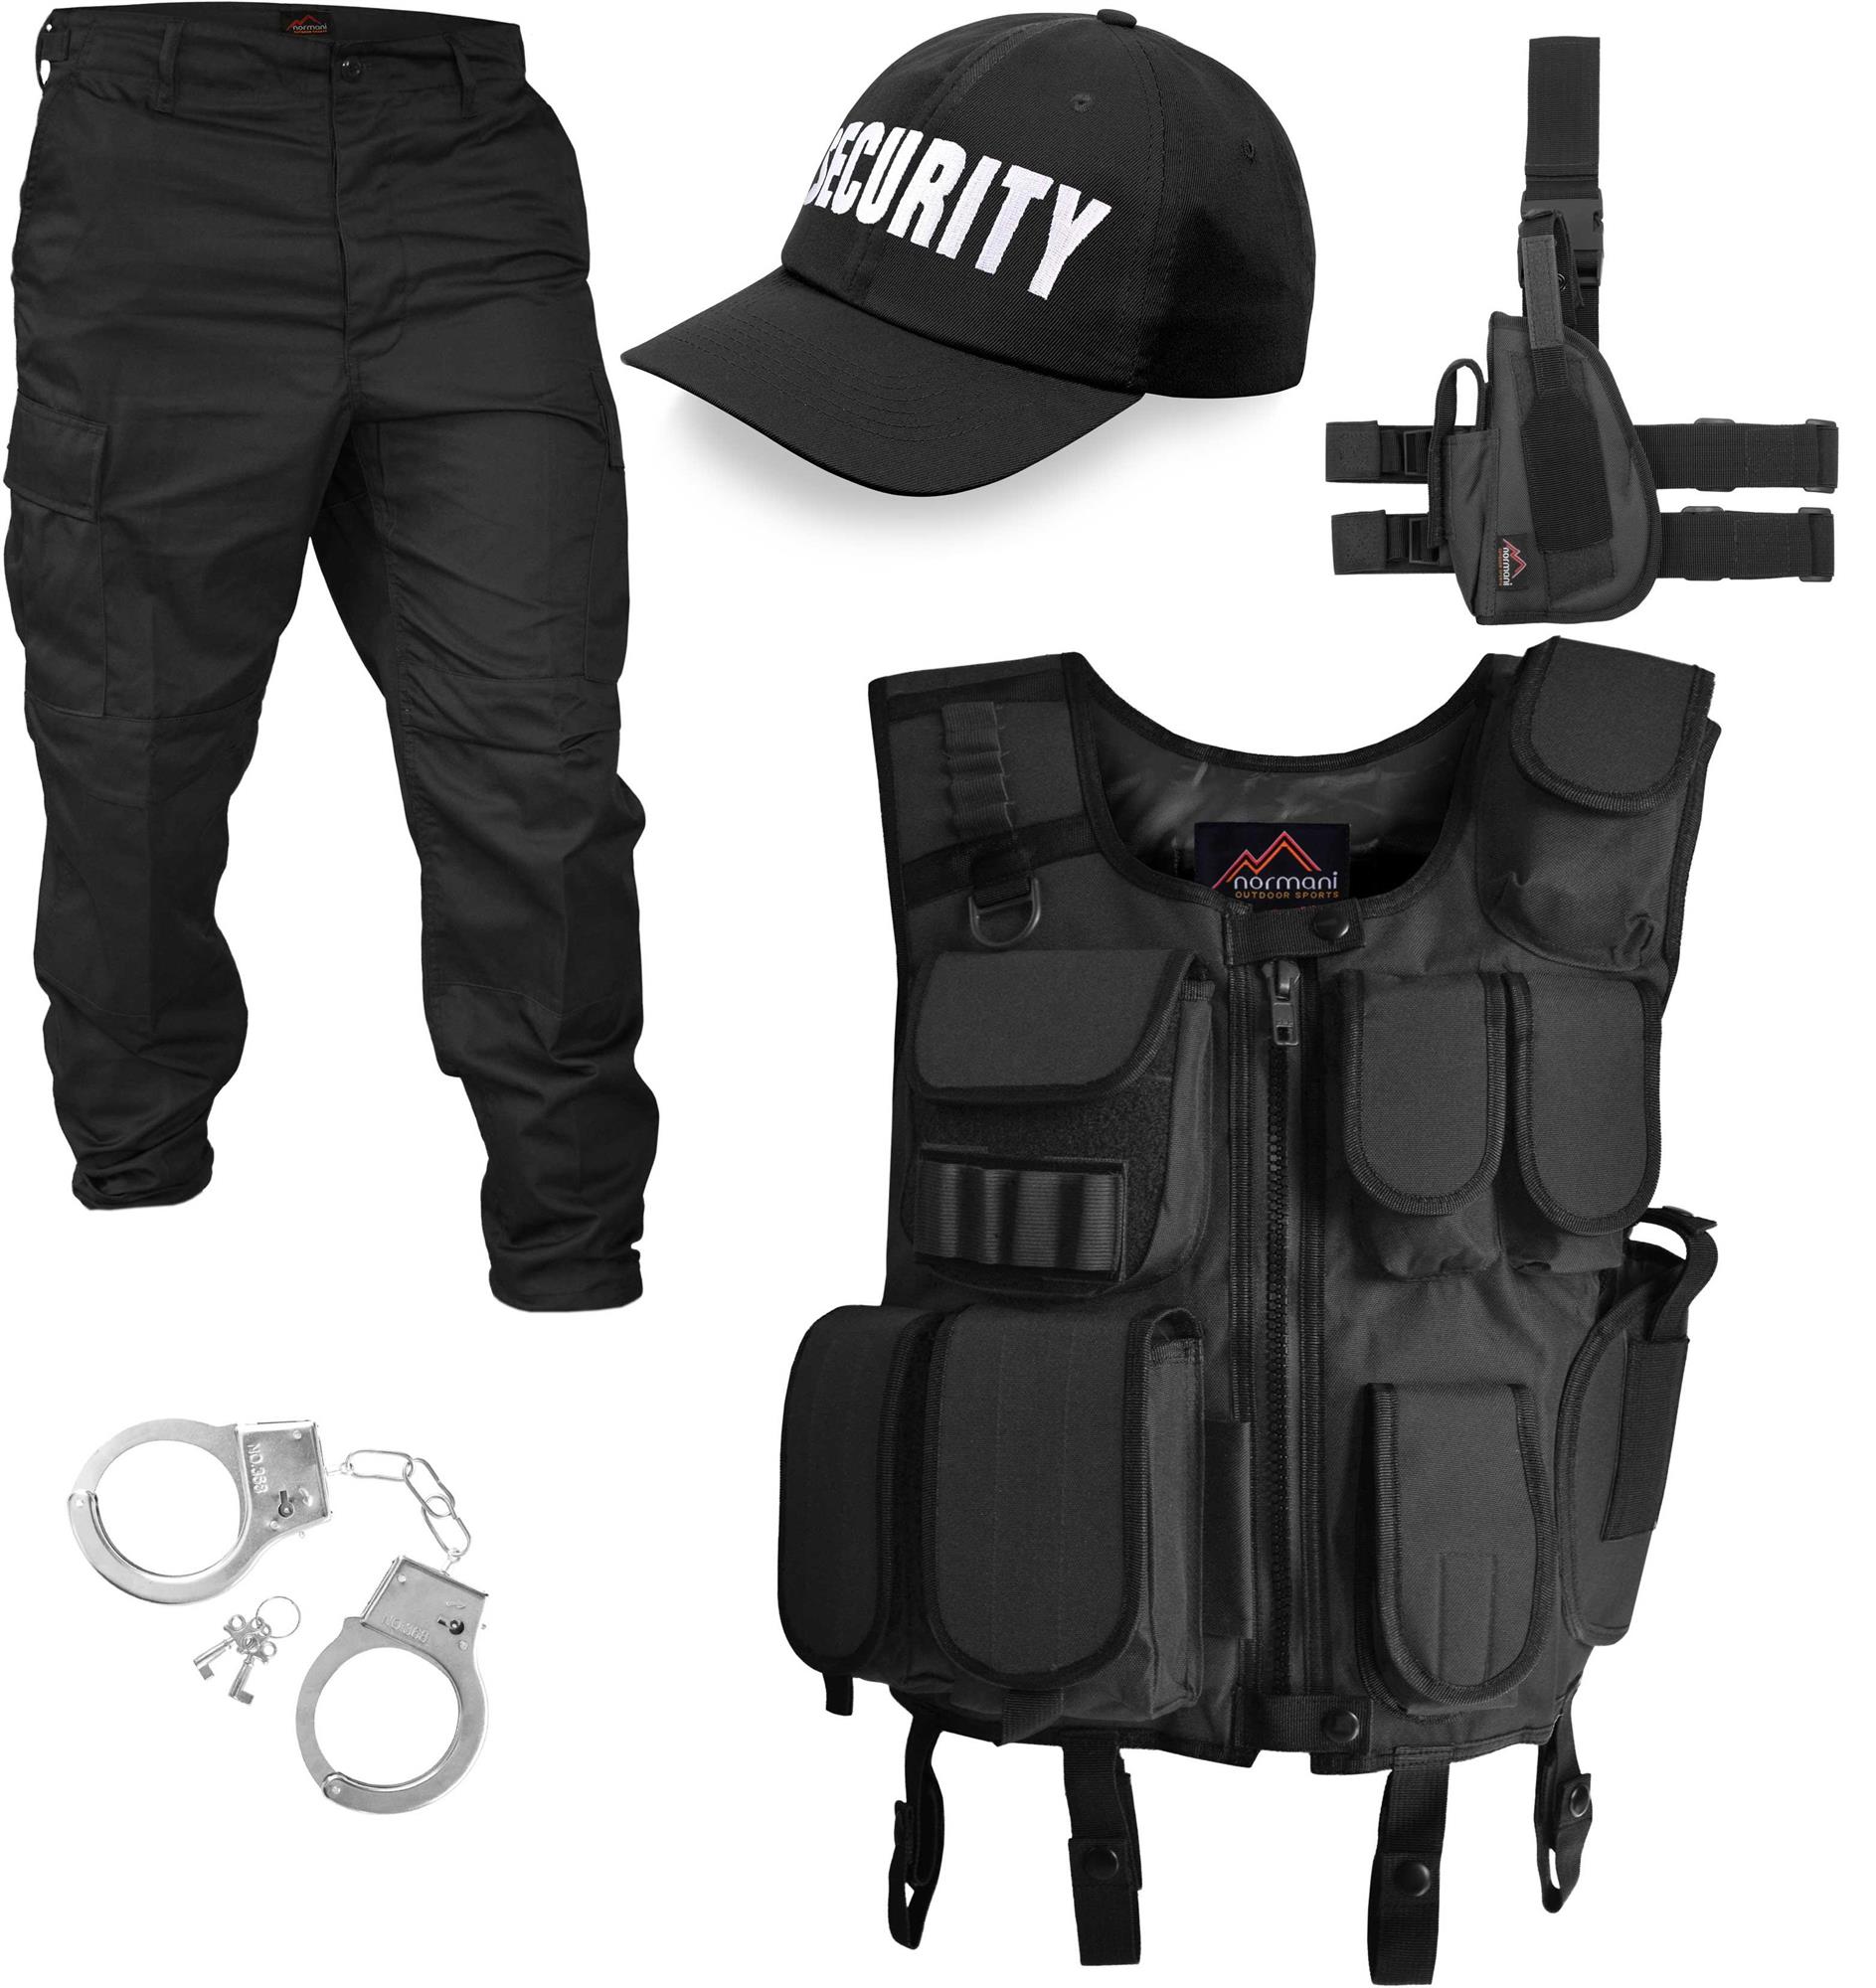 SWAT Kostüm Set bestehend aus Weste, Hose, Pistolenholster, Cap